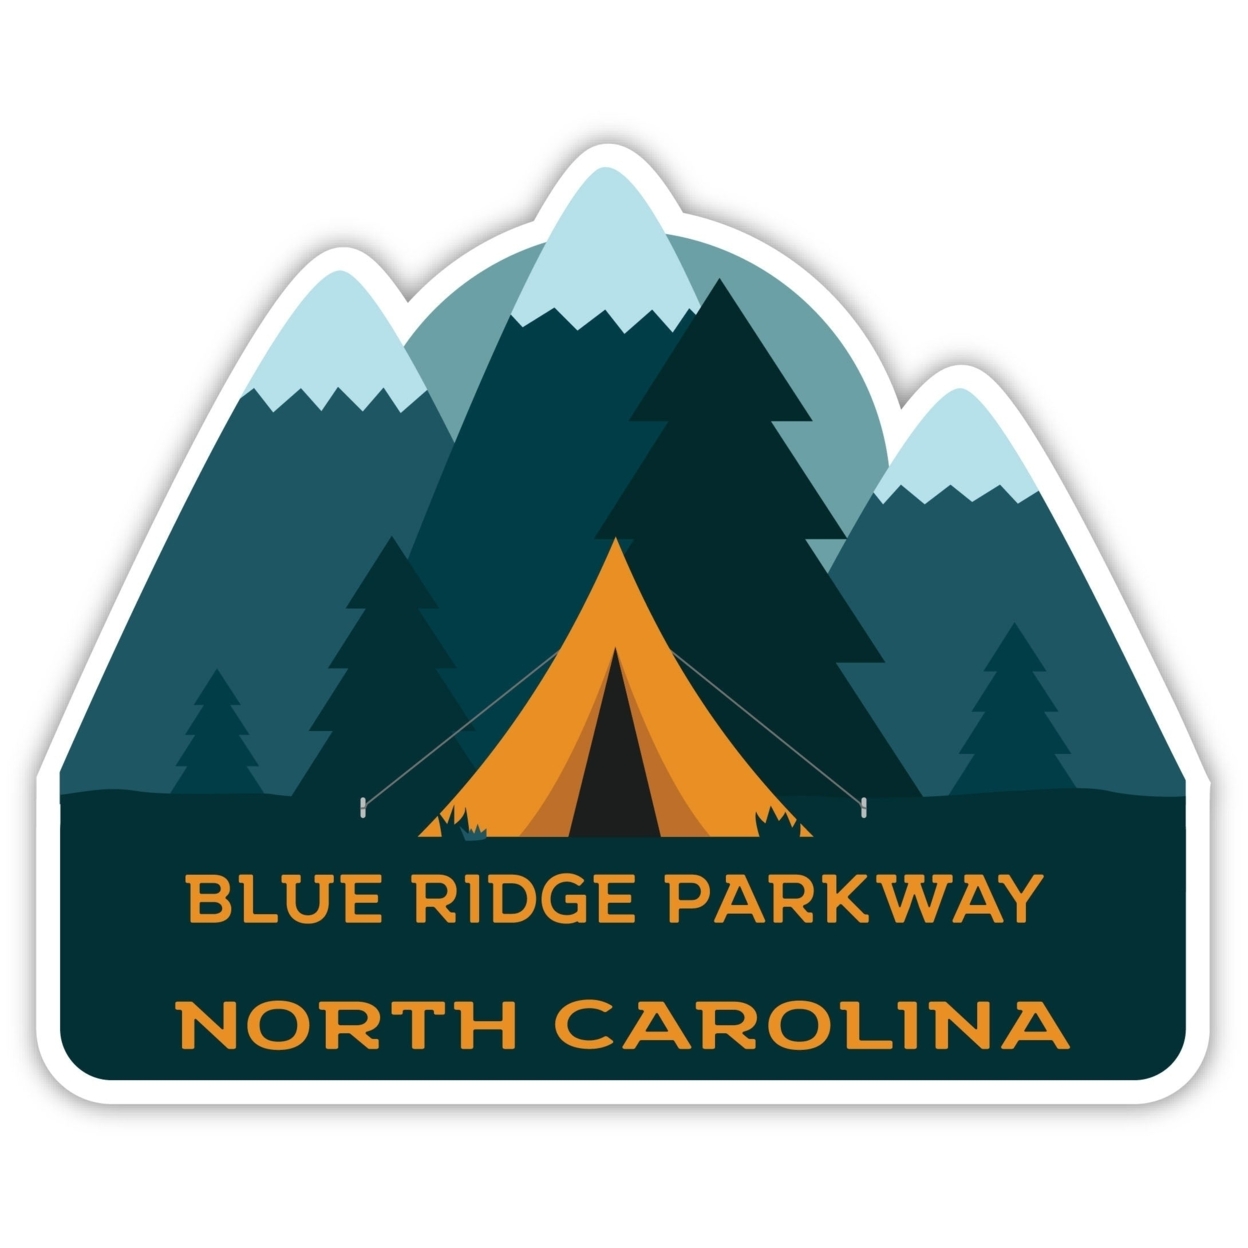 Blue Ridge Parkway North Carolina Souvenir Decorative Stickers (Choose Theme And Size) - 4-Pack, 2-Inch, Tent